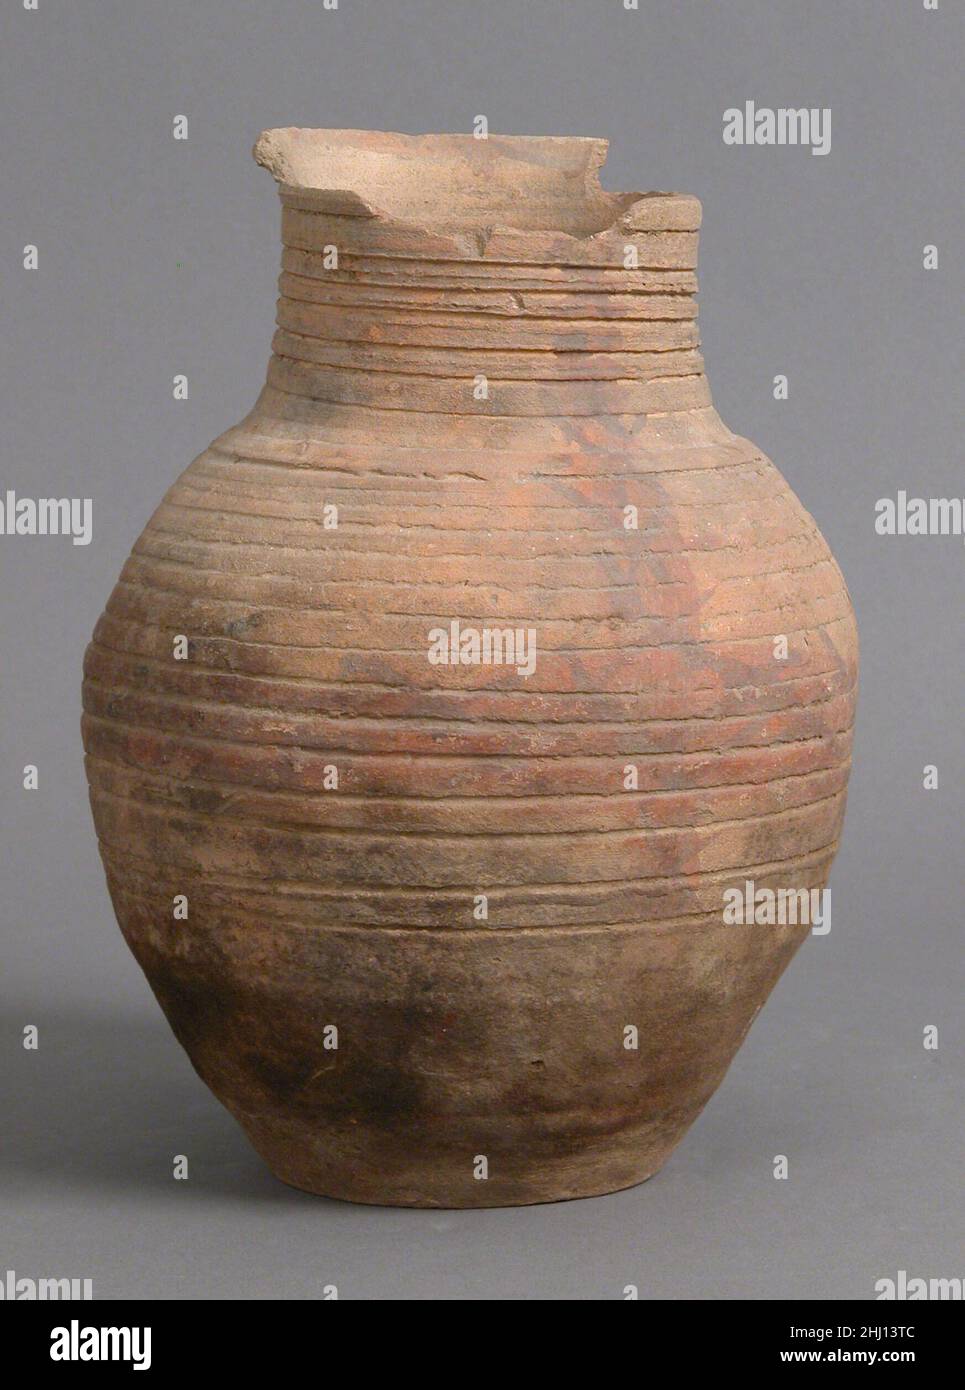 Amphora 4th–7th Jahrhundert koptisch. Amphore. Koptisch. 4th–7th Jahrhundert. Steingut. Hergestellt in der Oase Kharga, byzantinischem Ägypten. Keramik Stockfoto